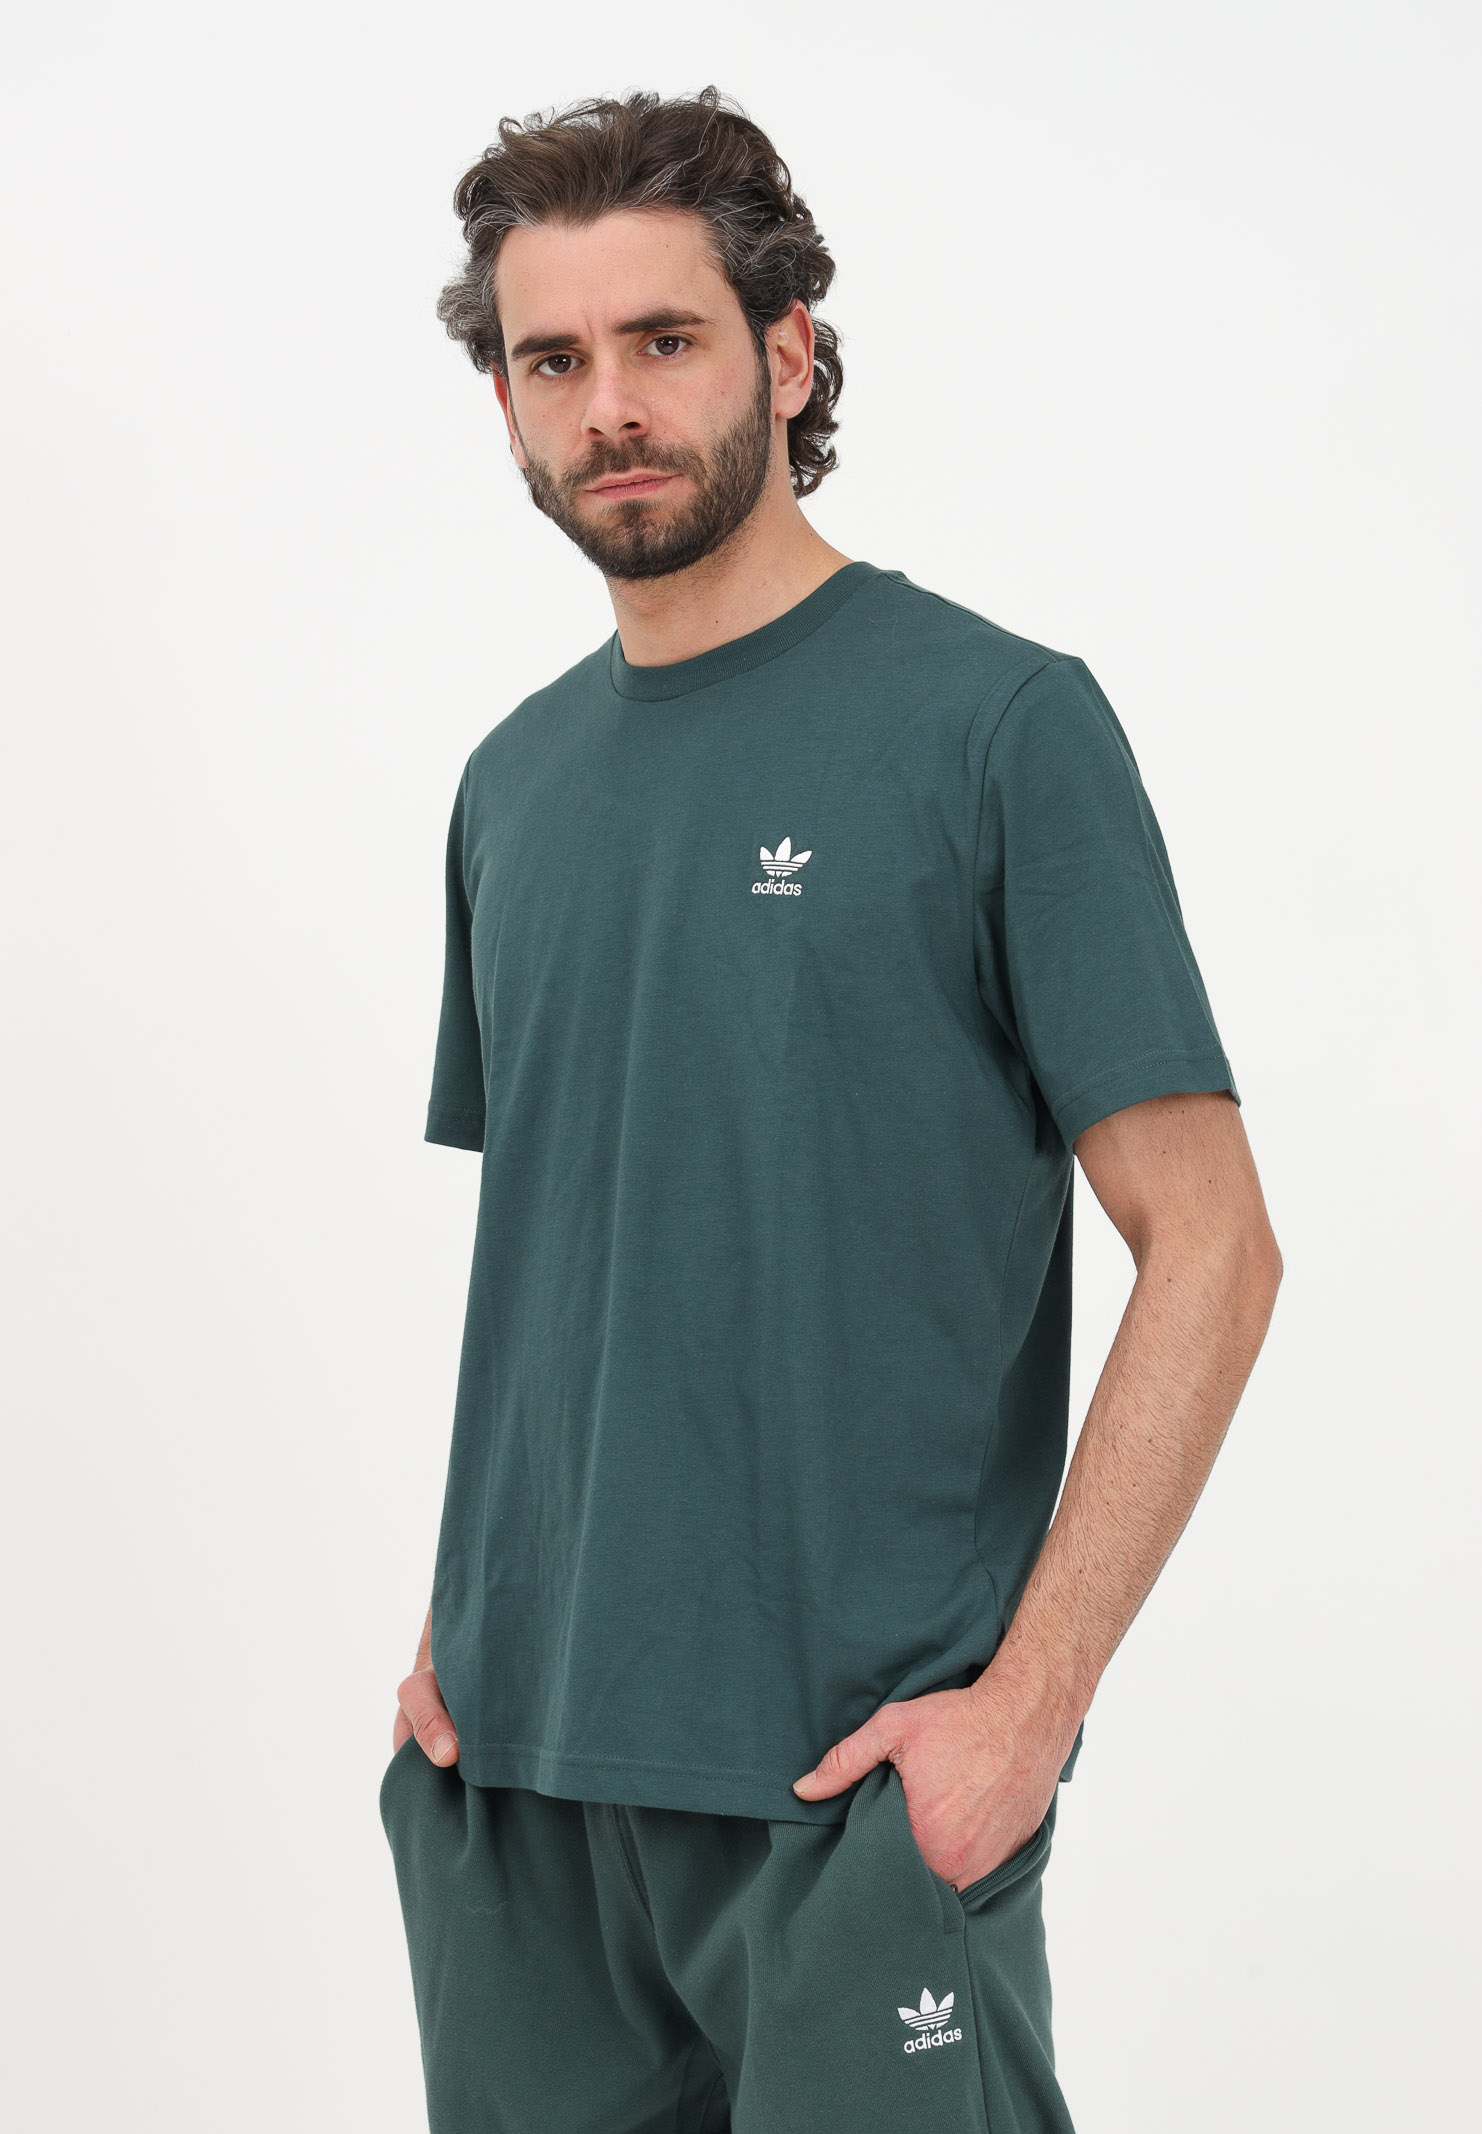 Green men's sports T-shirt with logo embroidery - ADIDAS - Pavidas